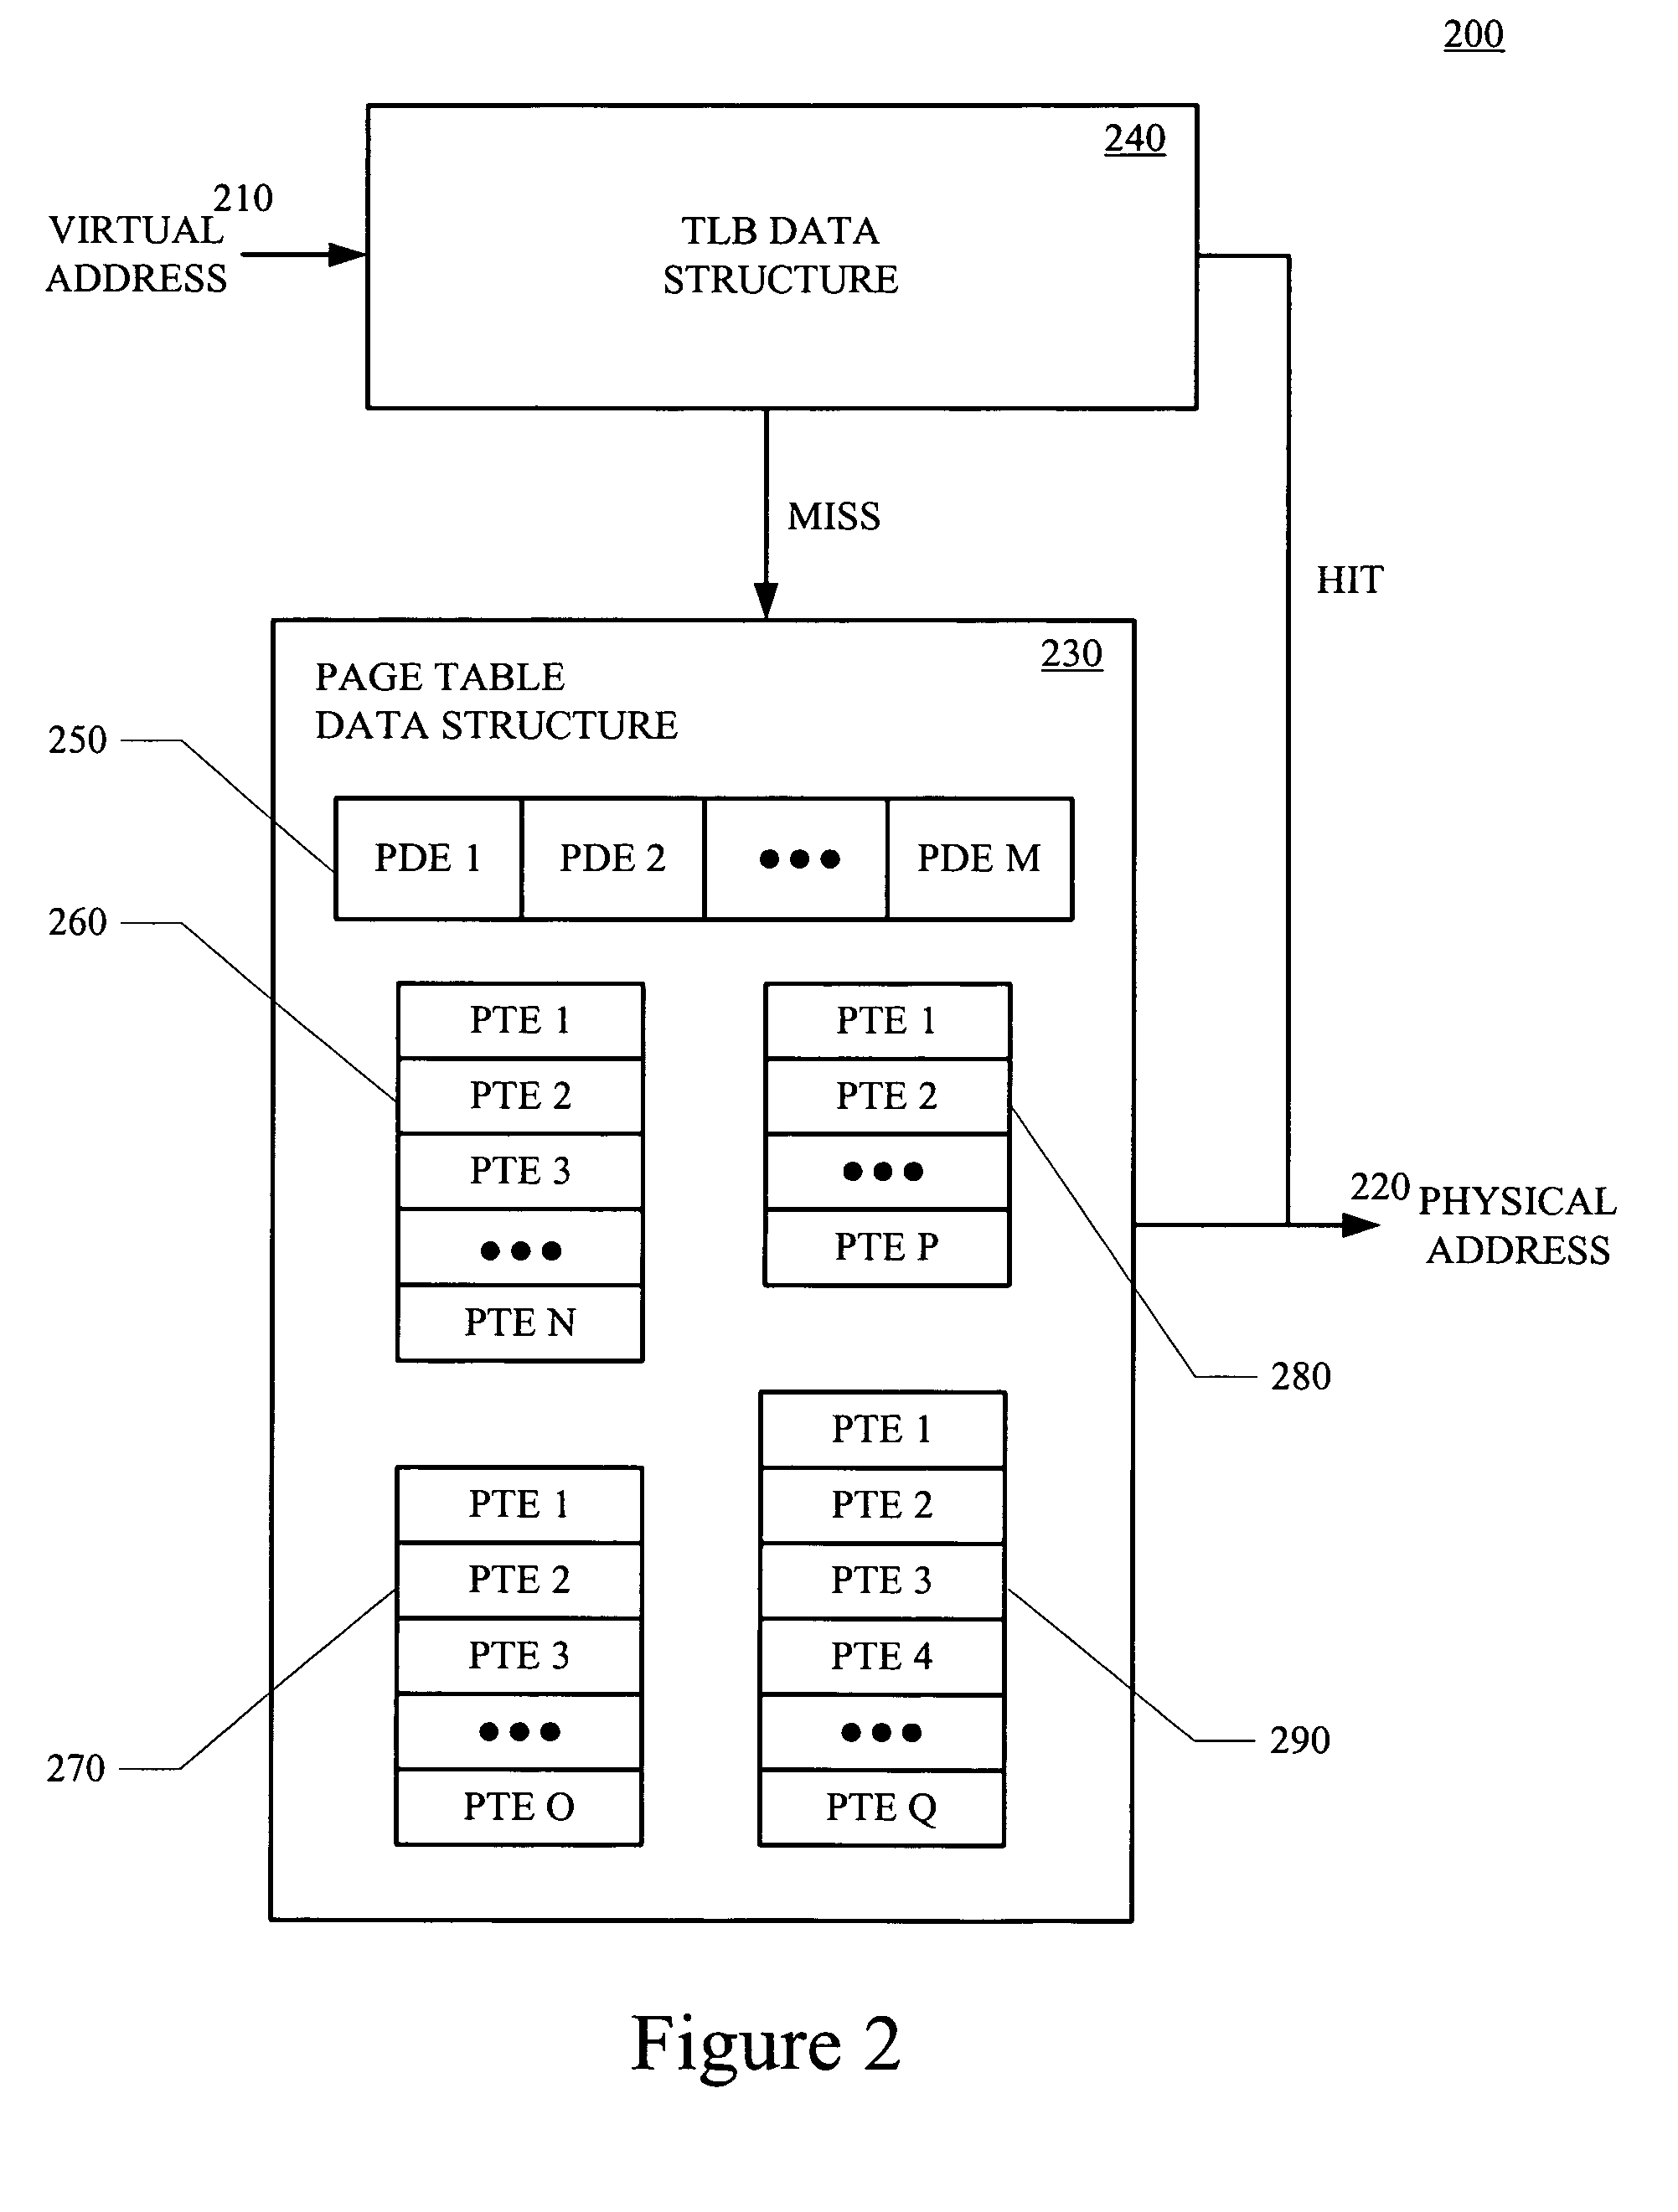 Memory access techniques utilizing a set-associative translation lookaside buffer